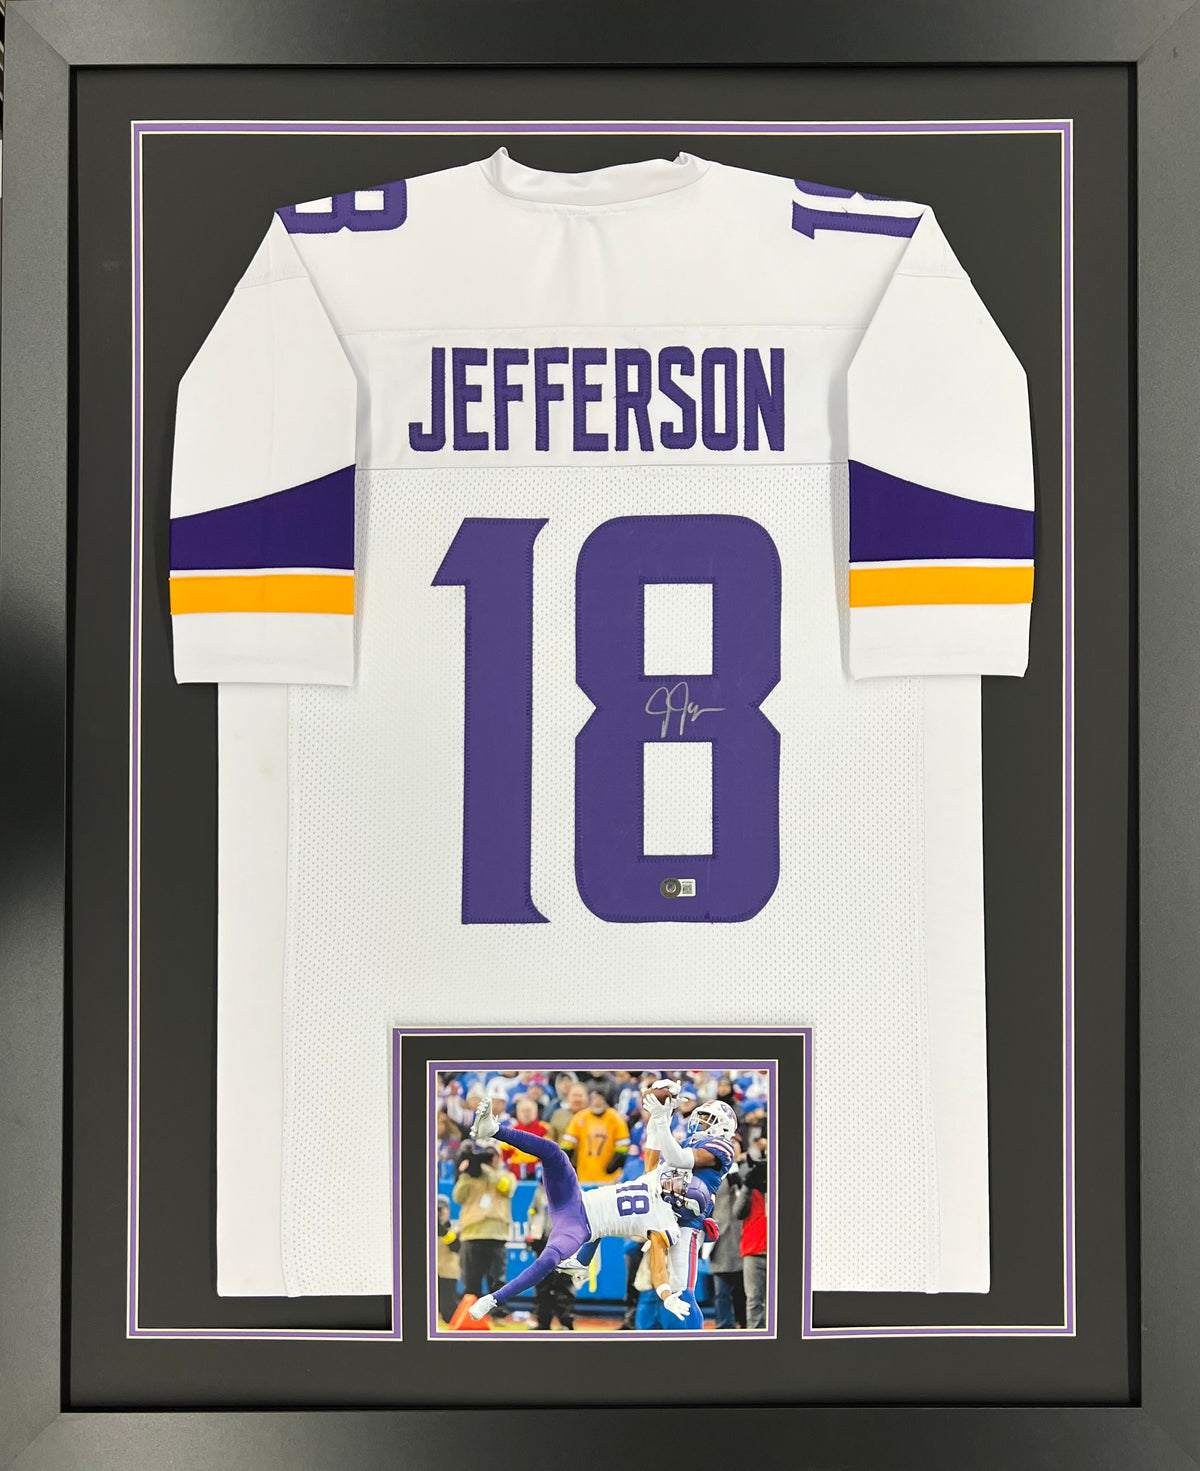 Justin Jefferson Signed Custom Purple Football Jersey